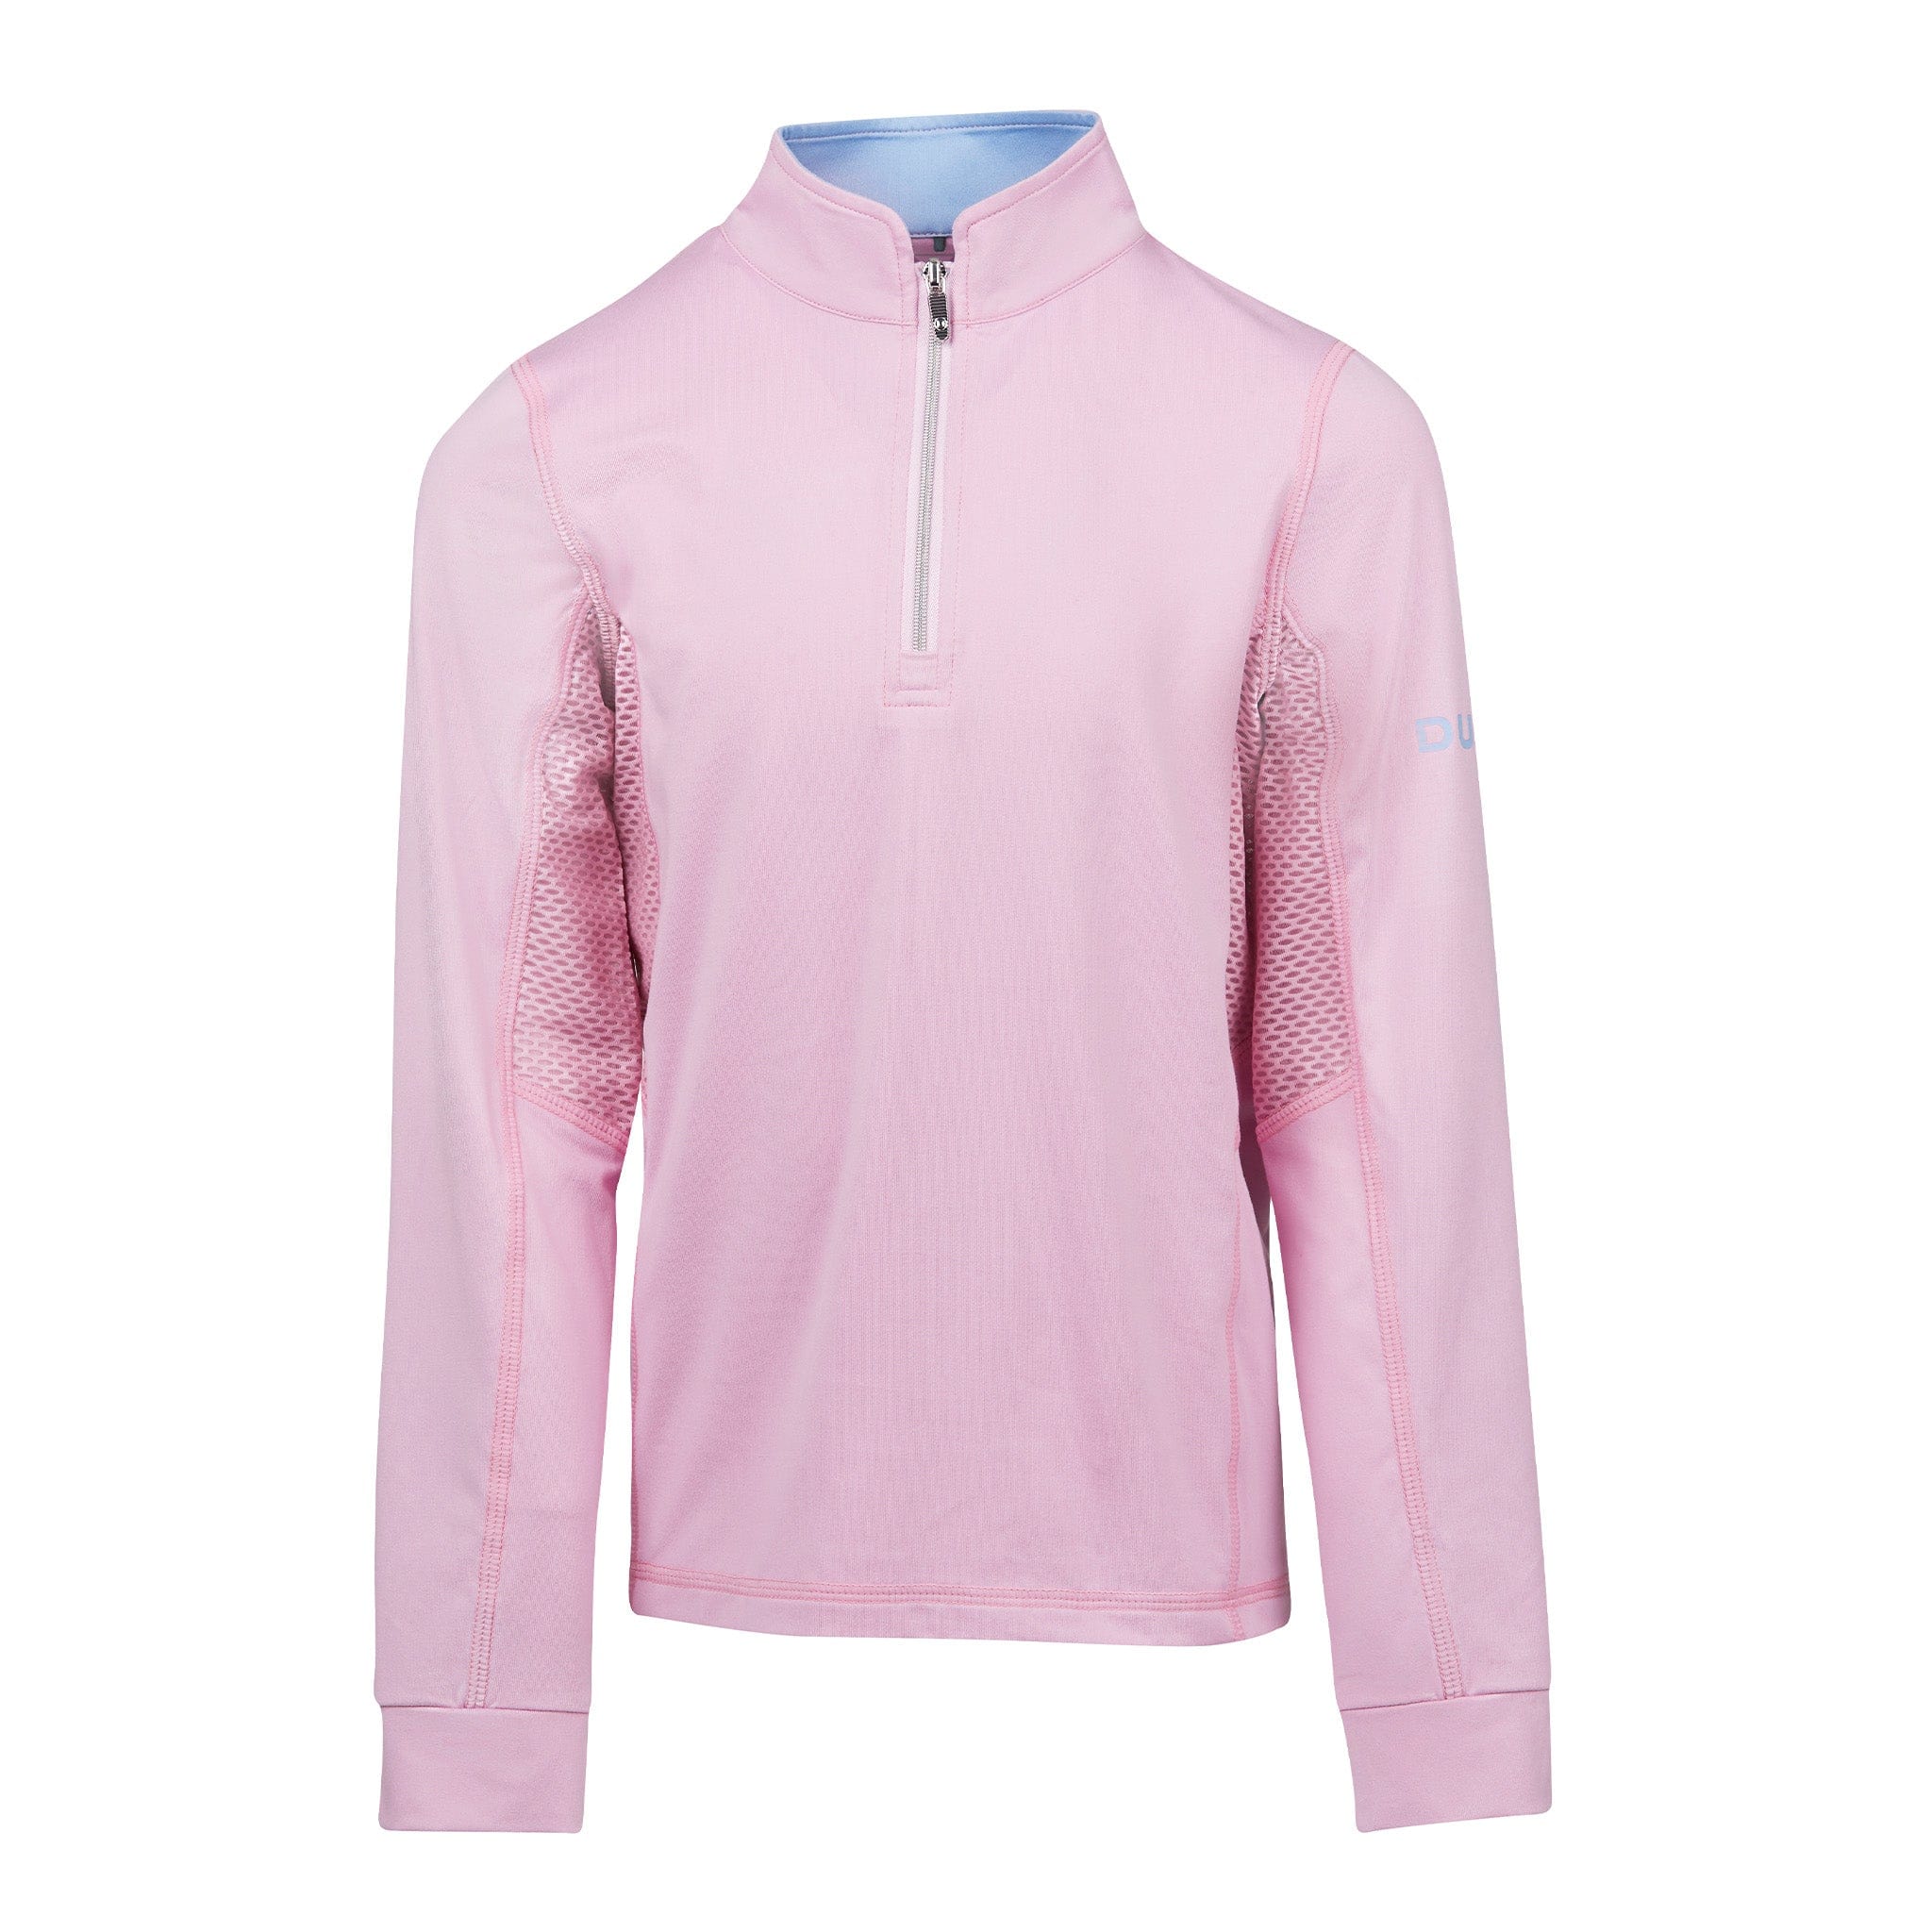 Dublin Children's Kylee Long Sleeve Shirt II 1005524179 Orchid Pink Studio